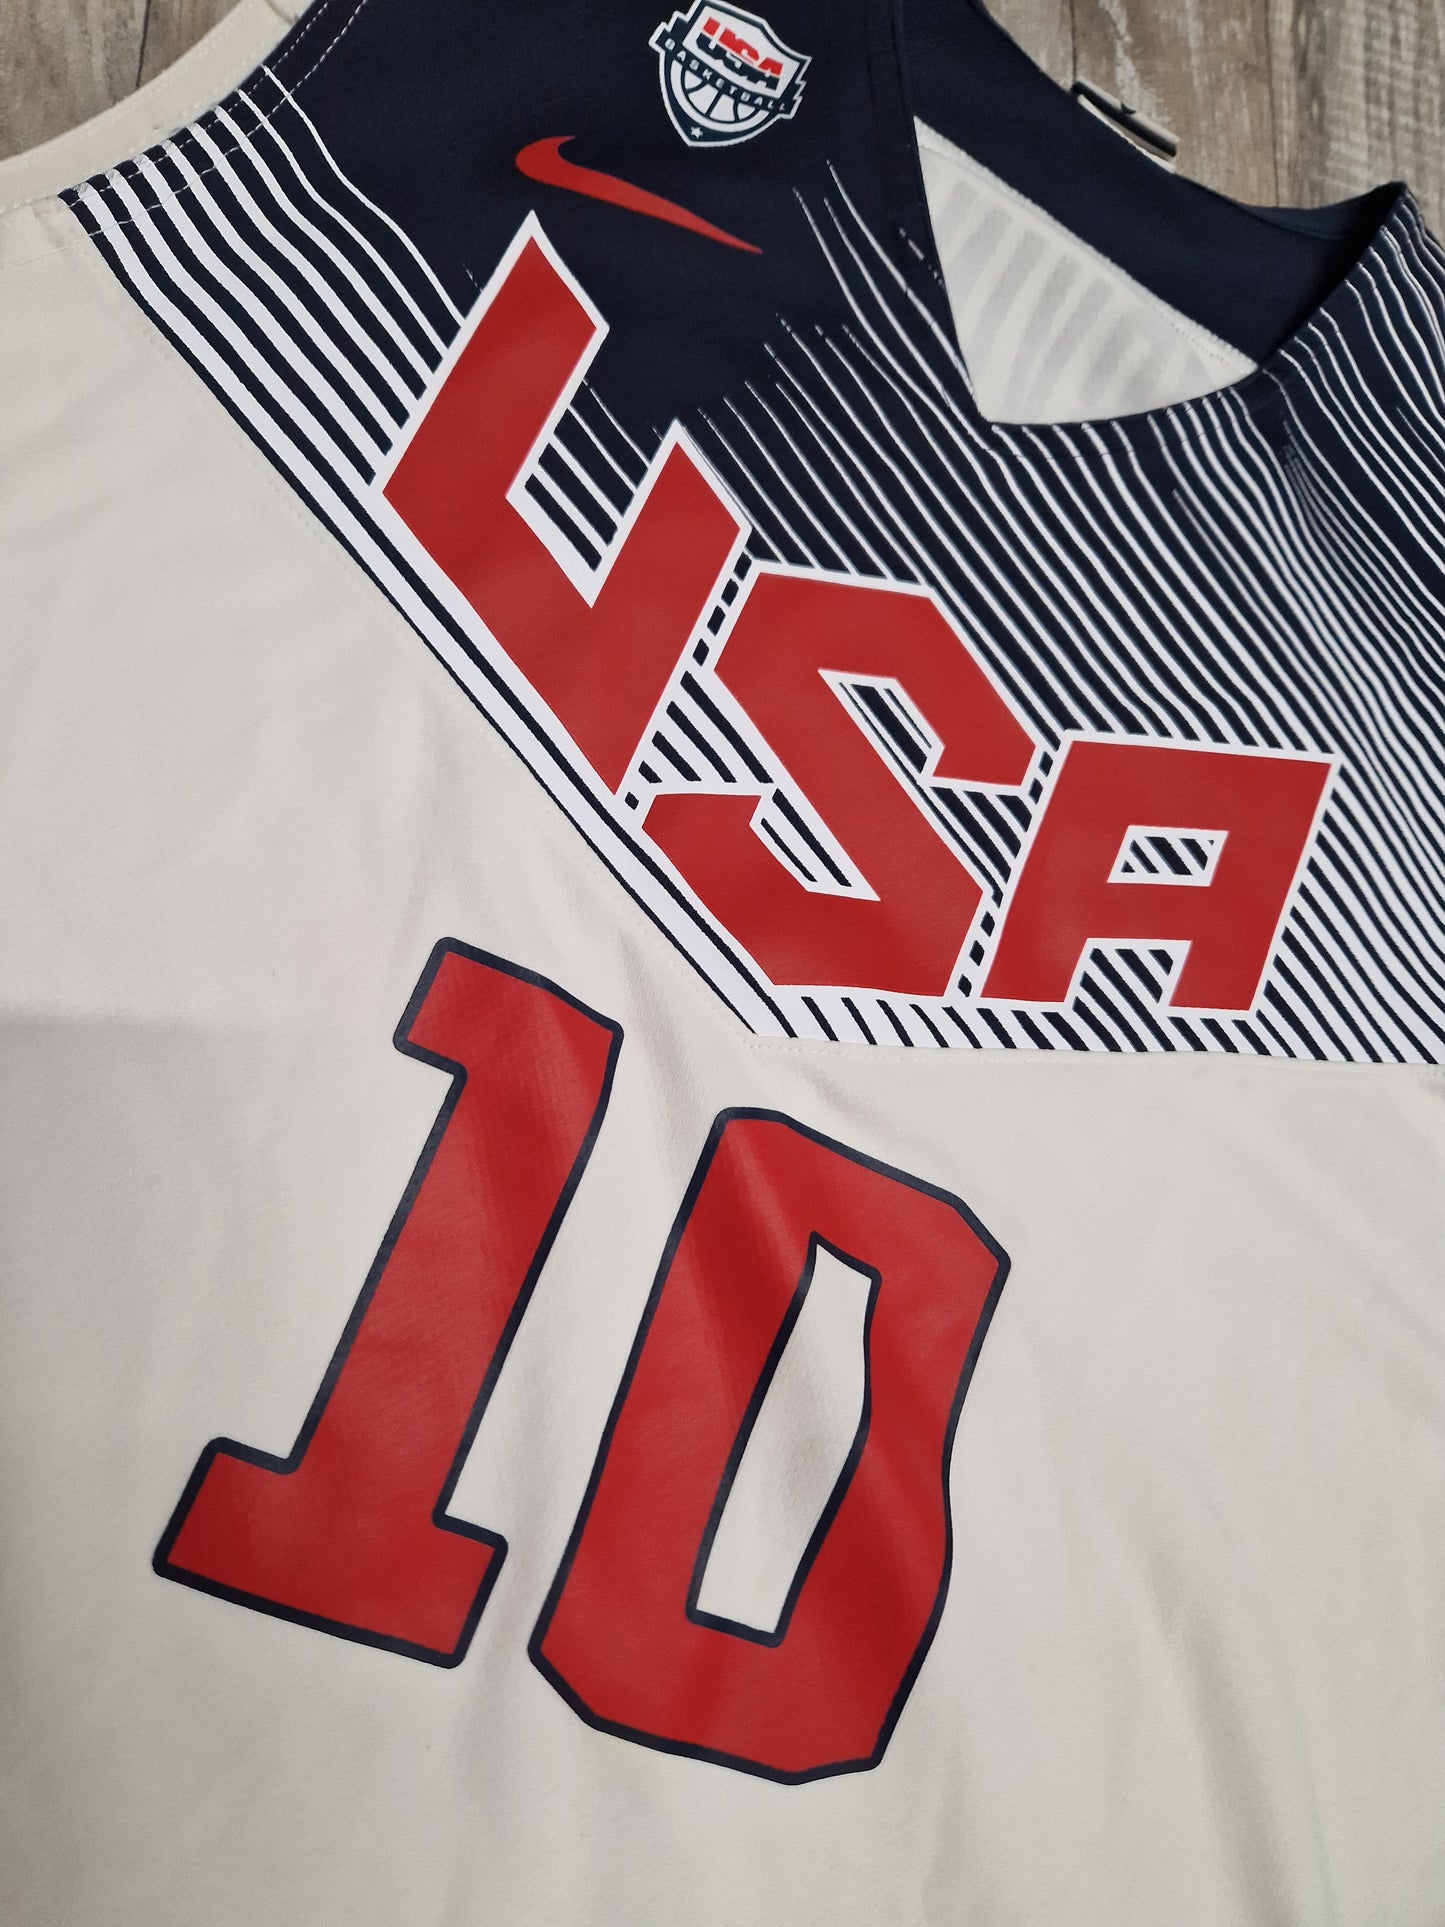 Kyrie Irving Team USA Jersey Size Medium